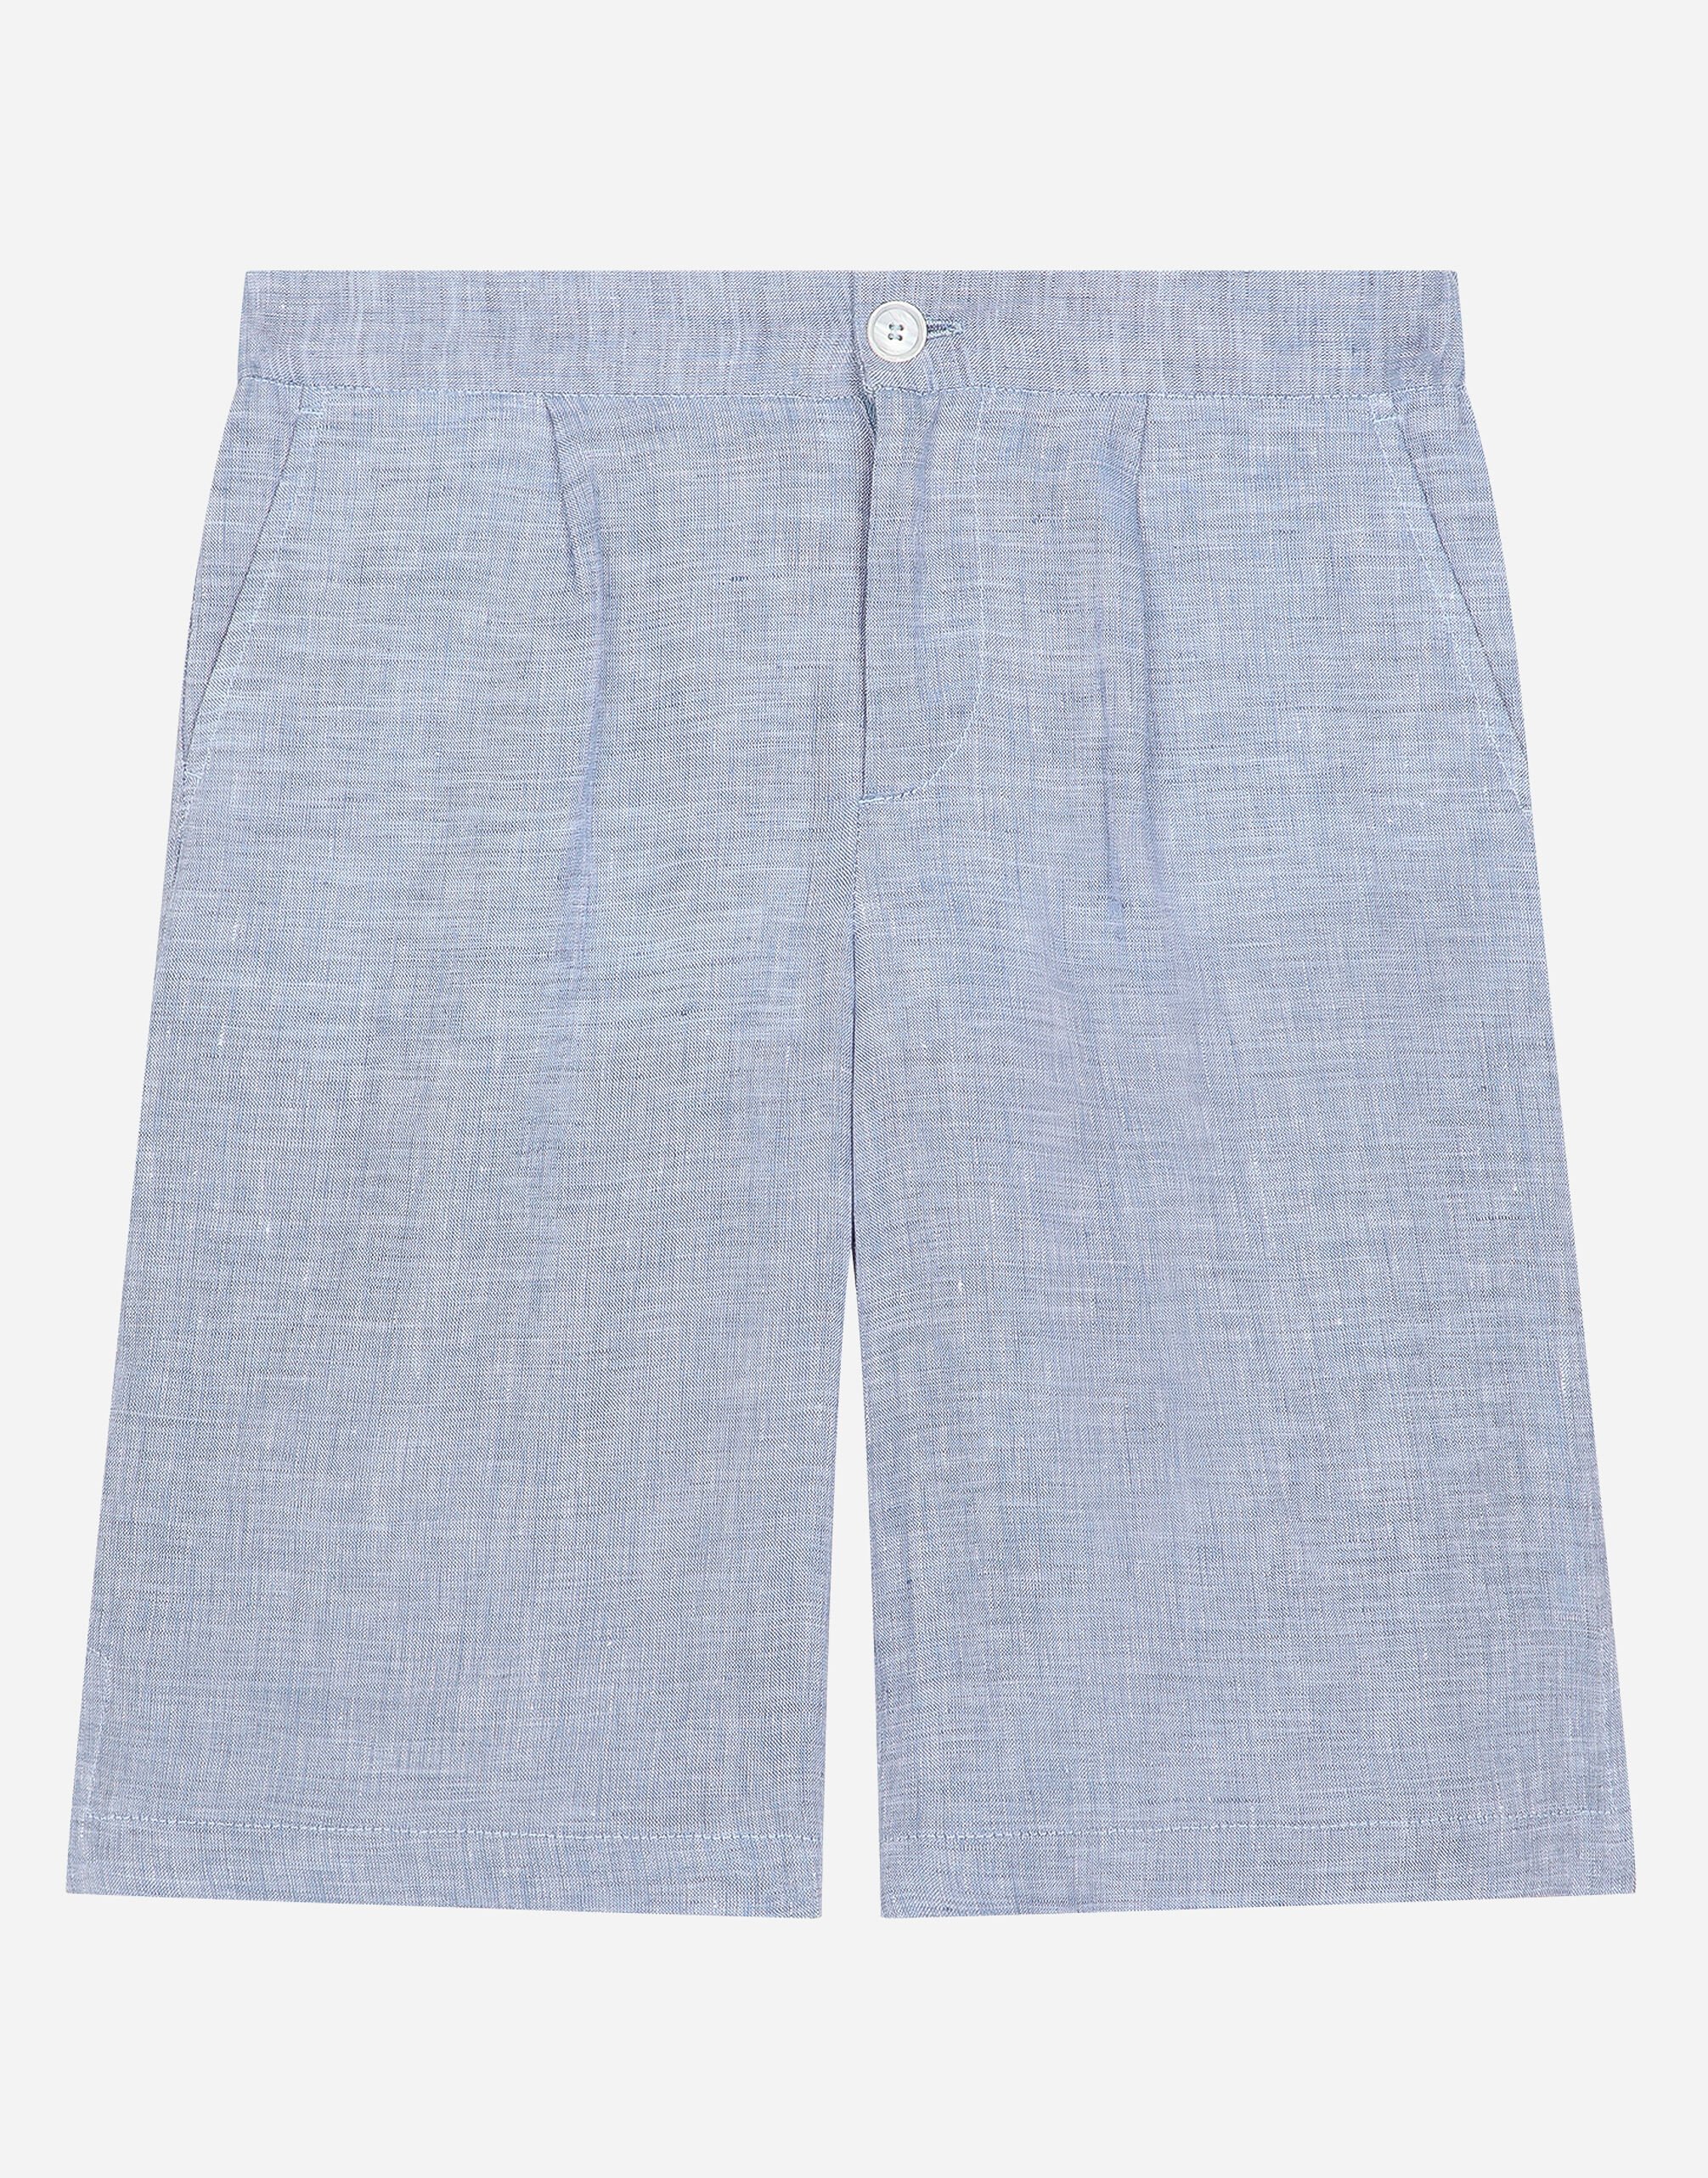 Dolce & Gabbana Non-stretch linen shorts Azure GW0MATFU4LG